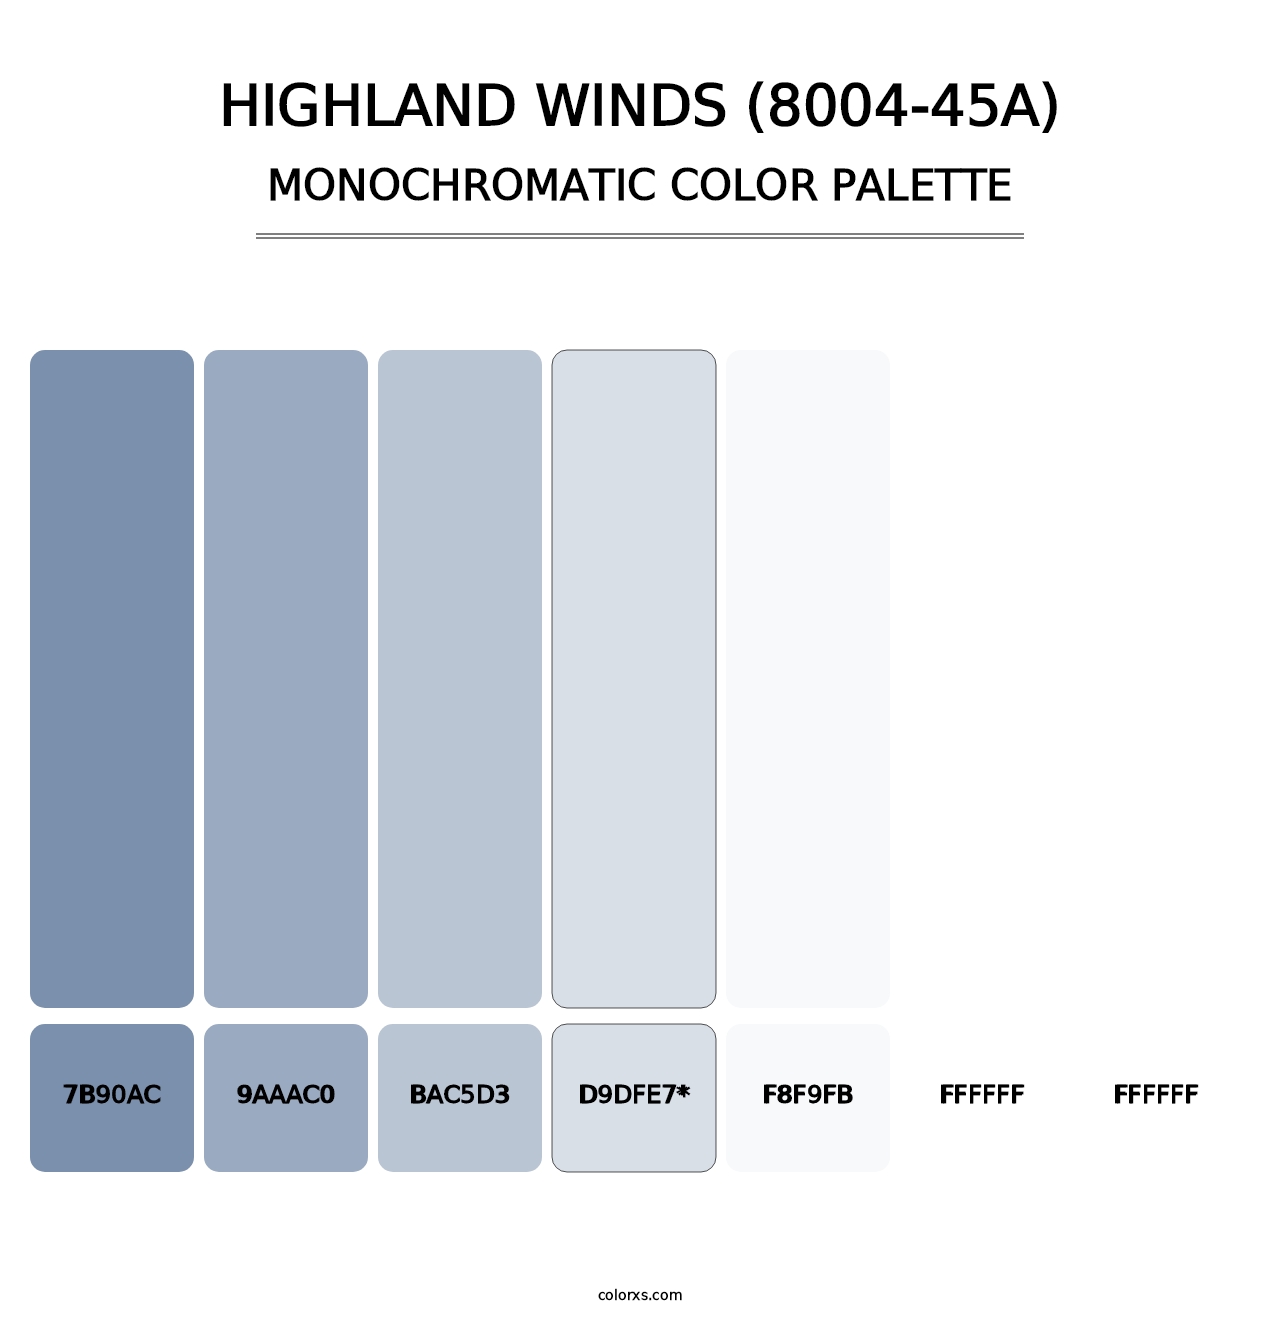 Highland Winds (8004-45A) - Monochromatic Color Palette